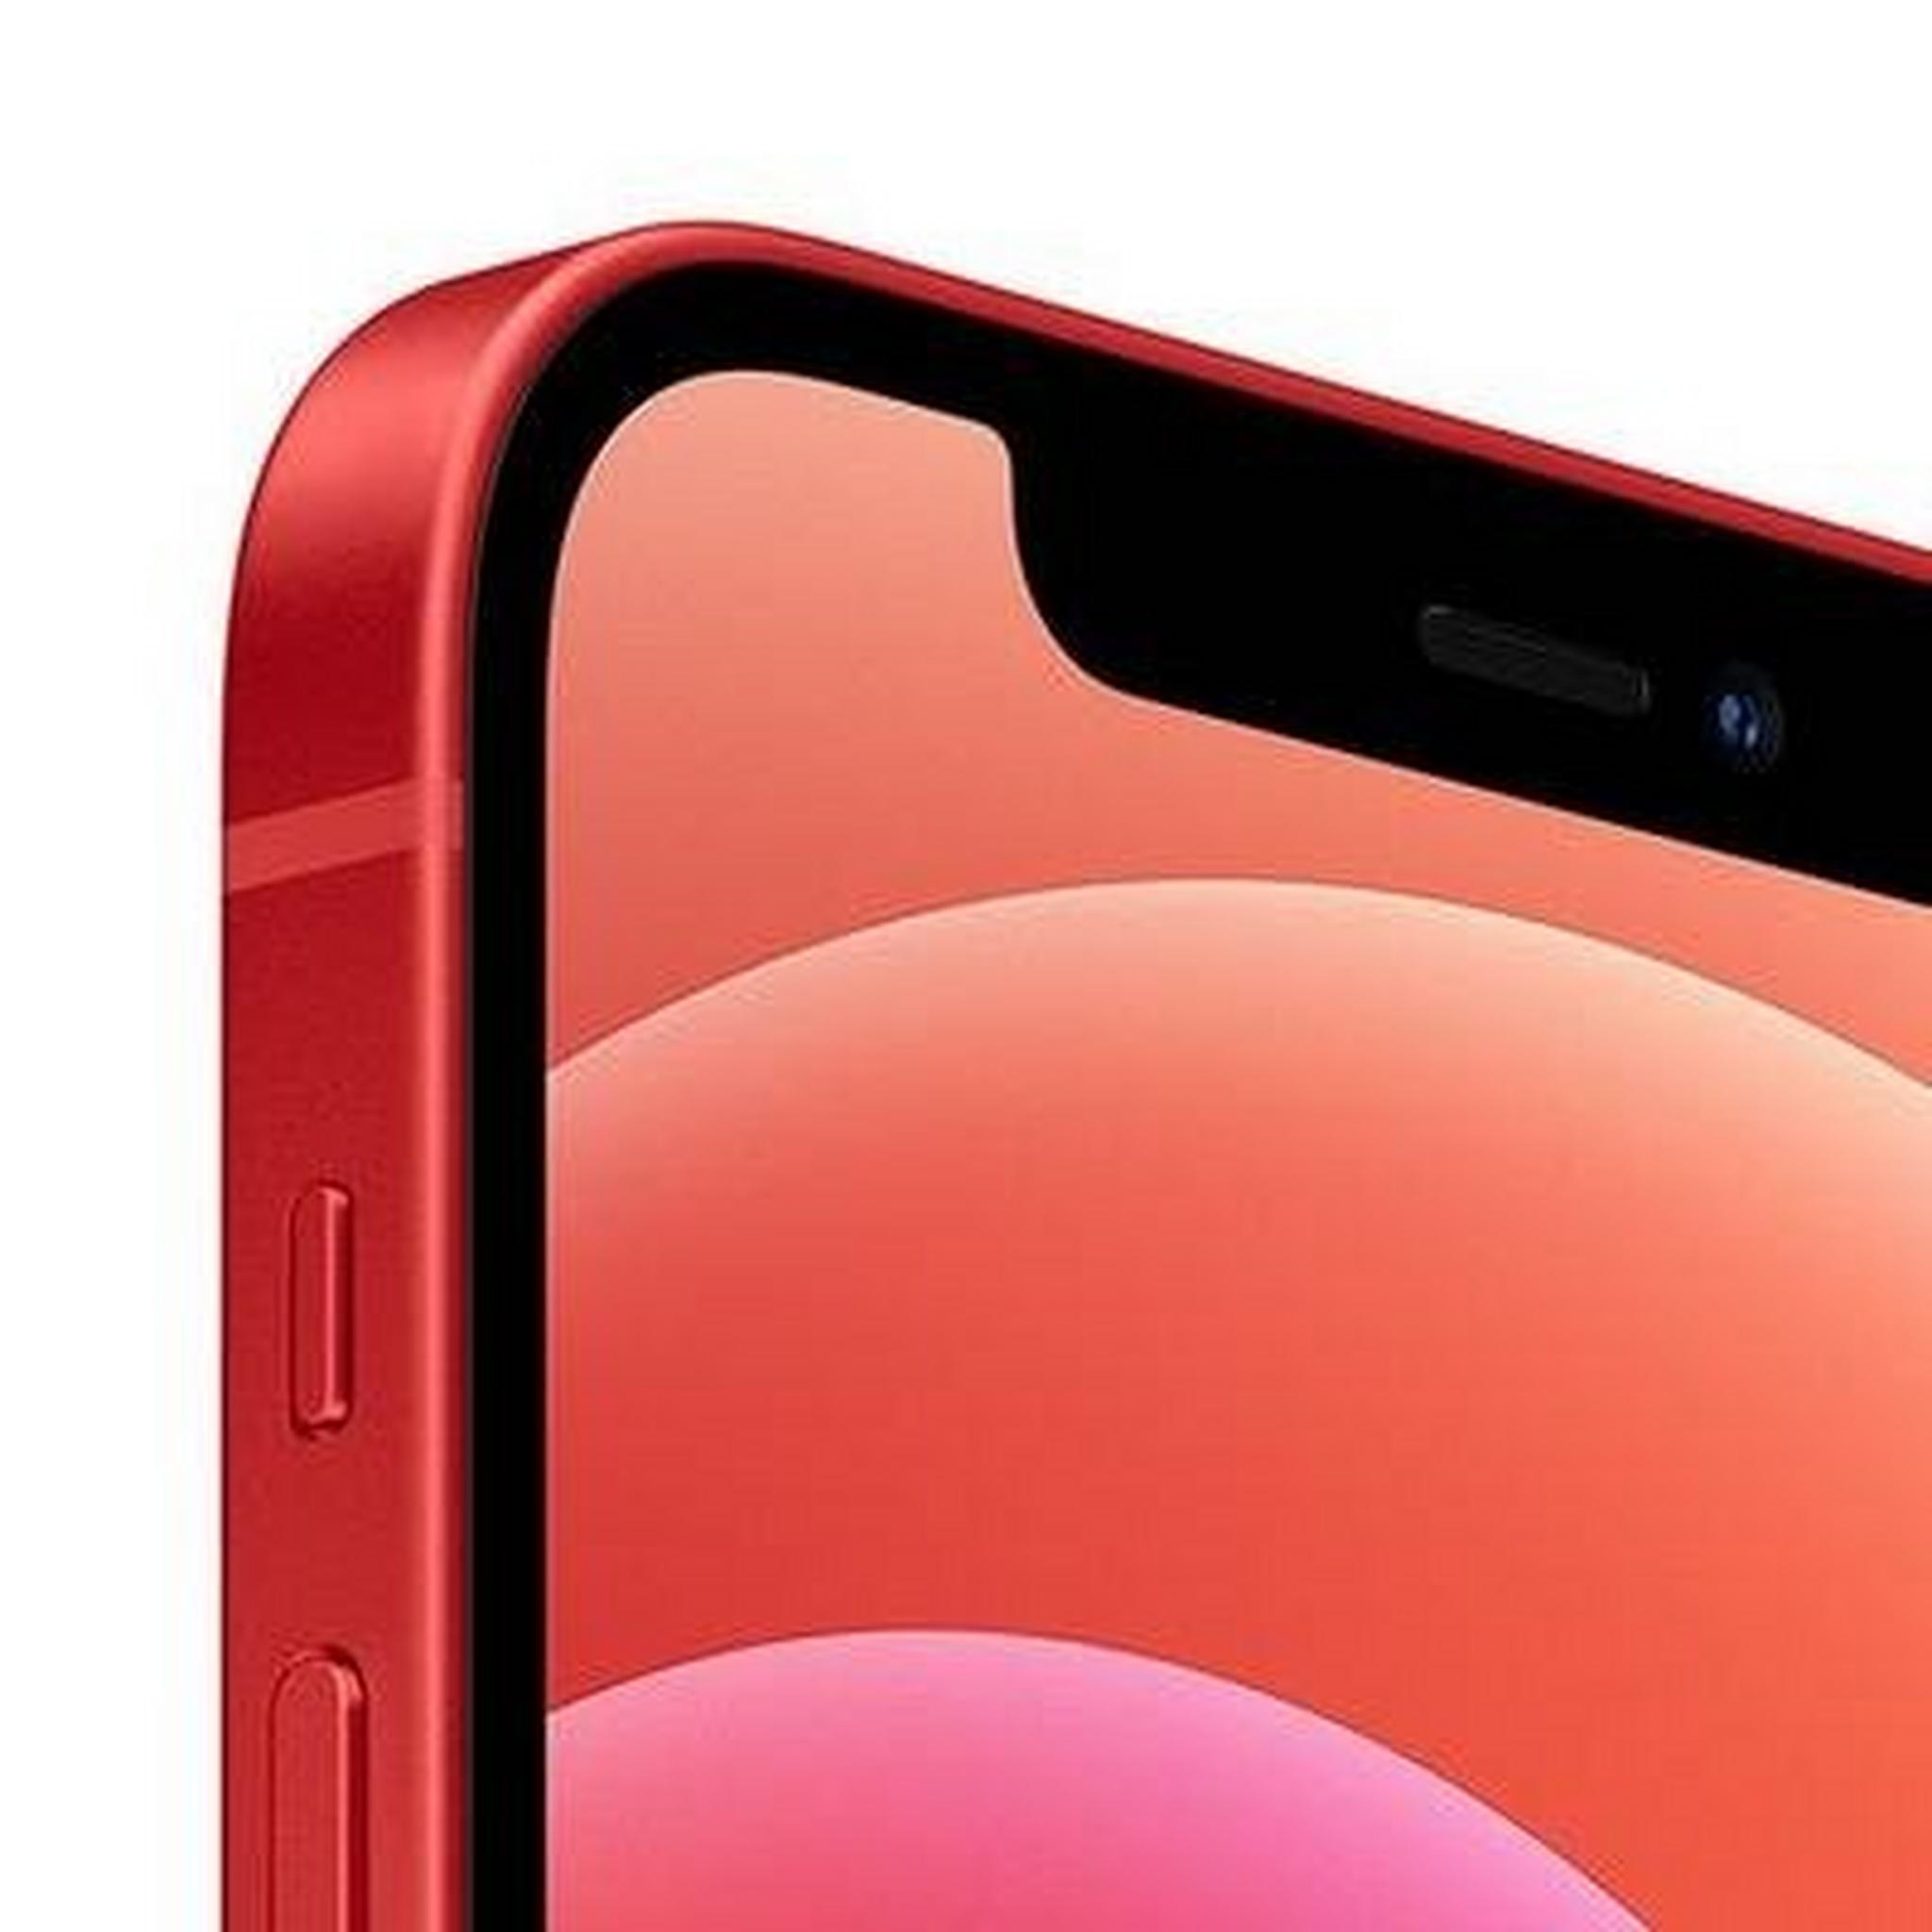 Apple iPhone 12 128GB - Red